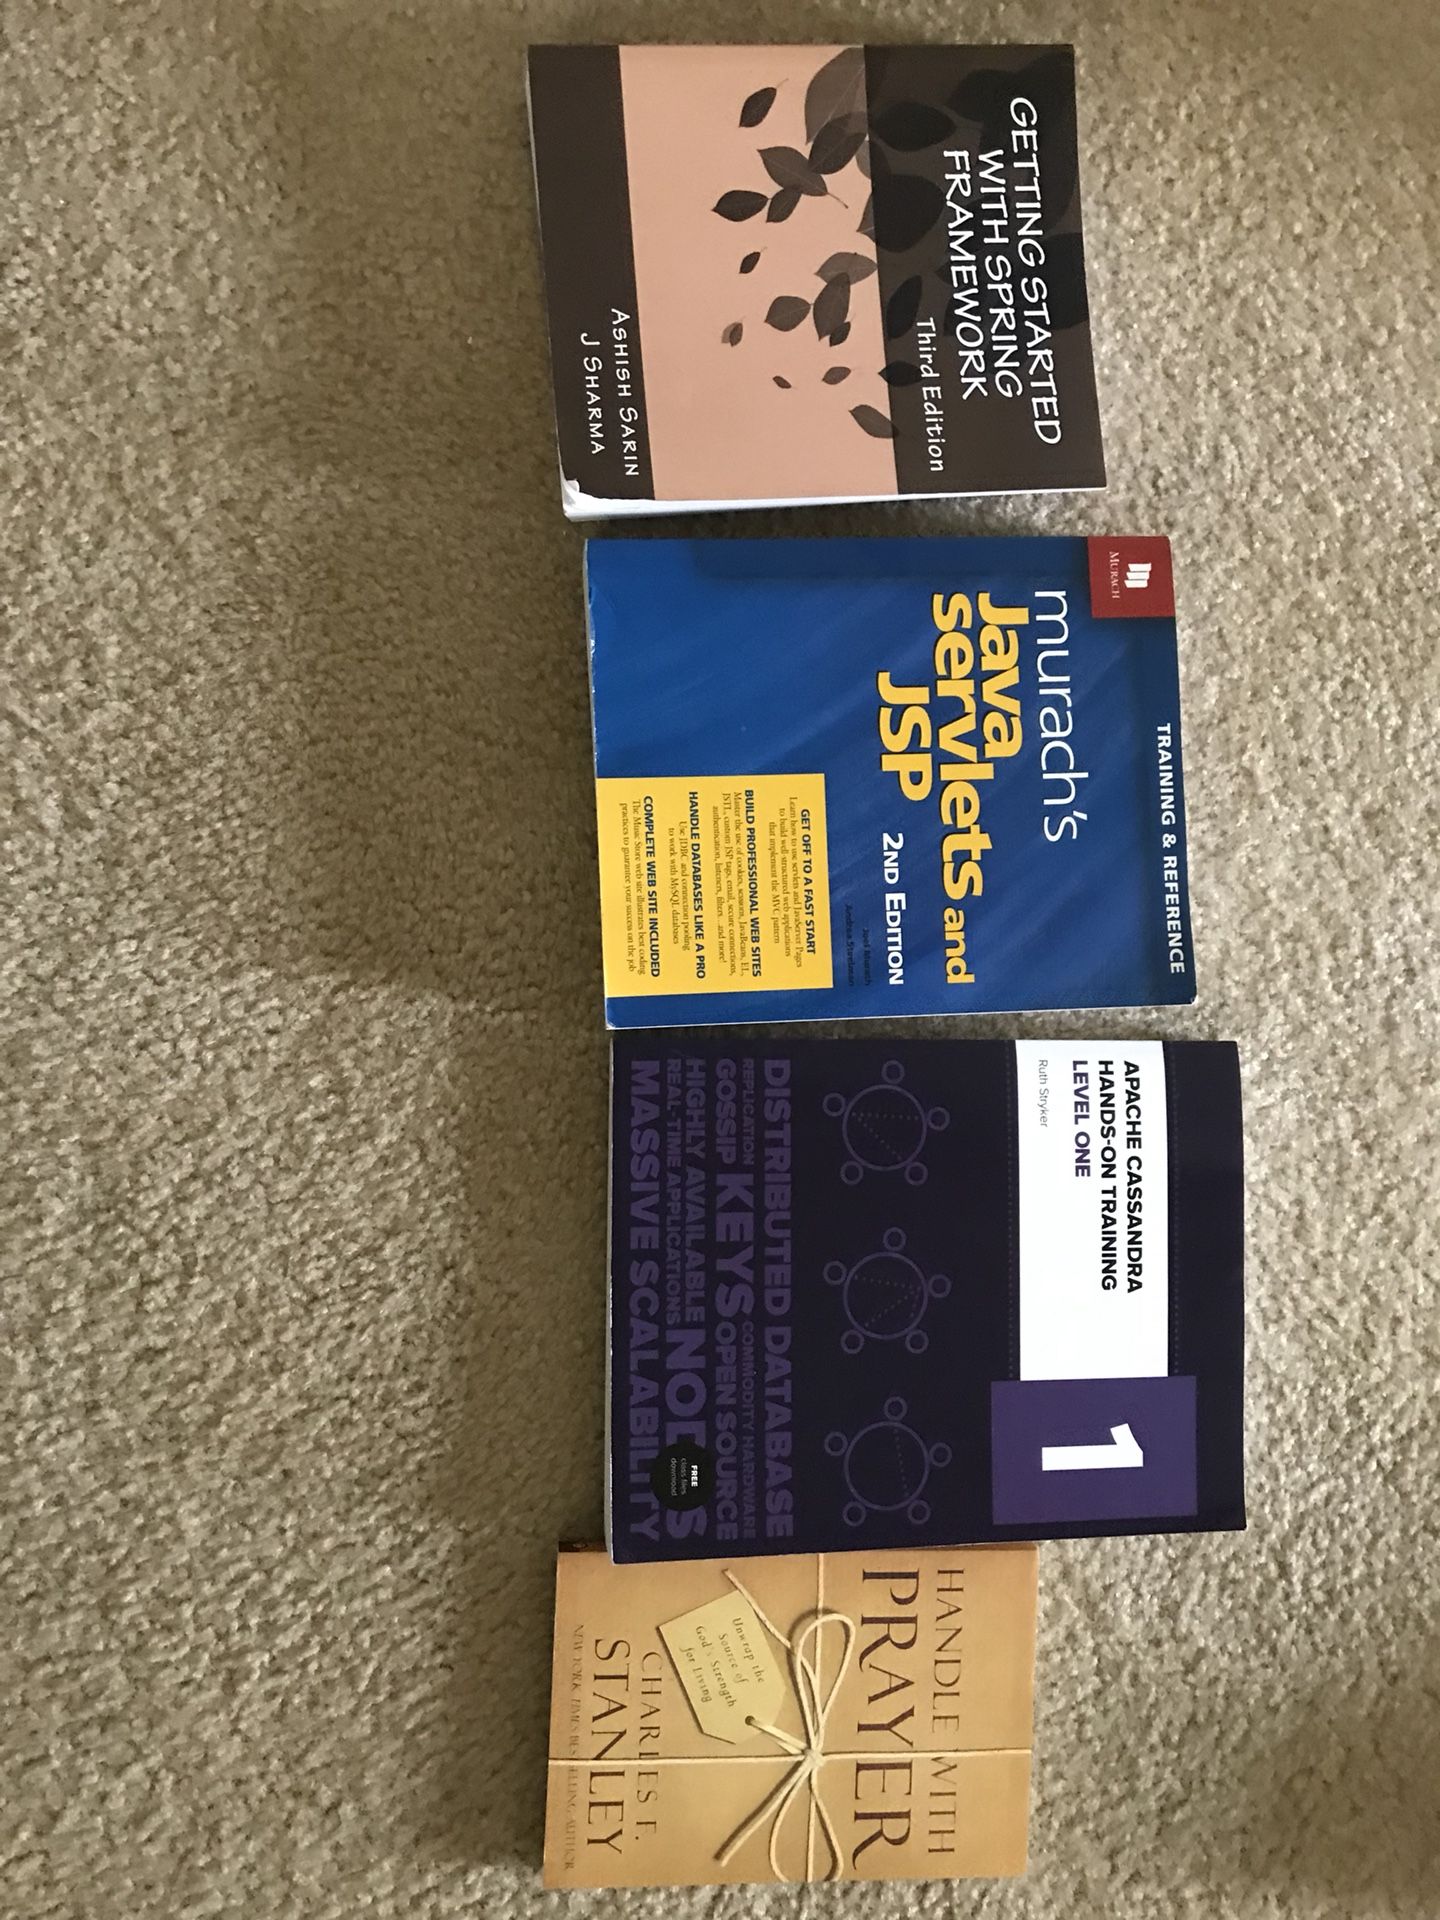 Java books